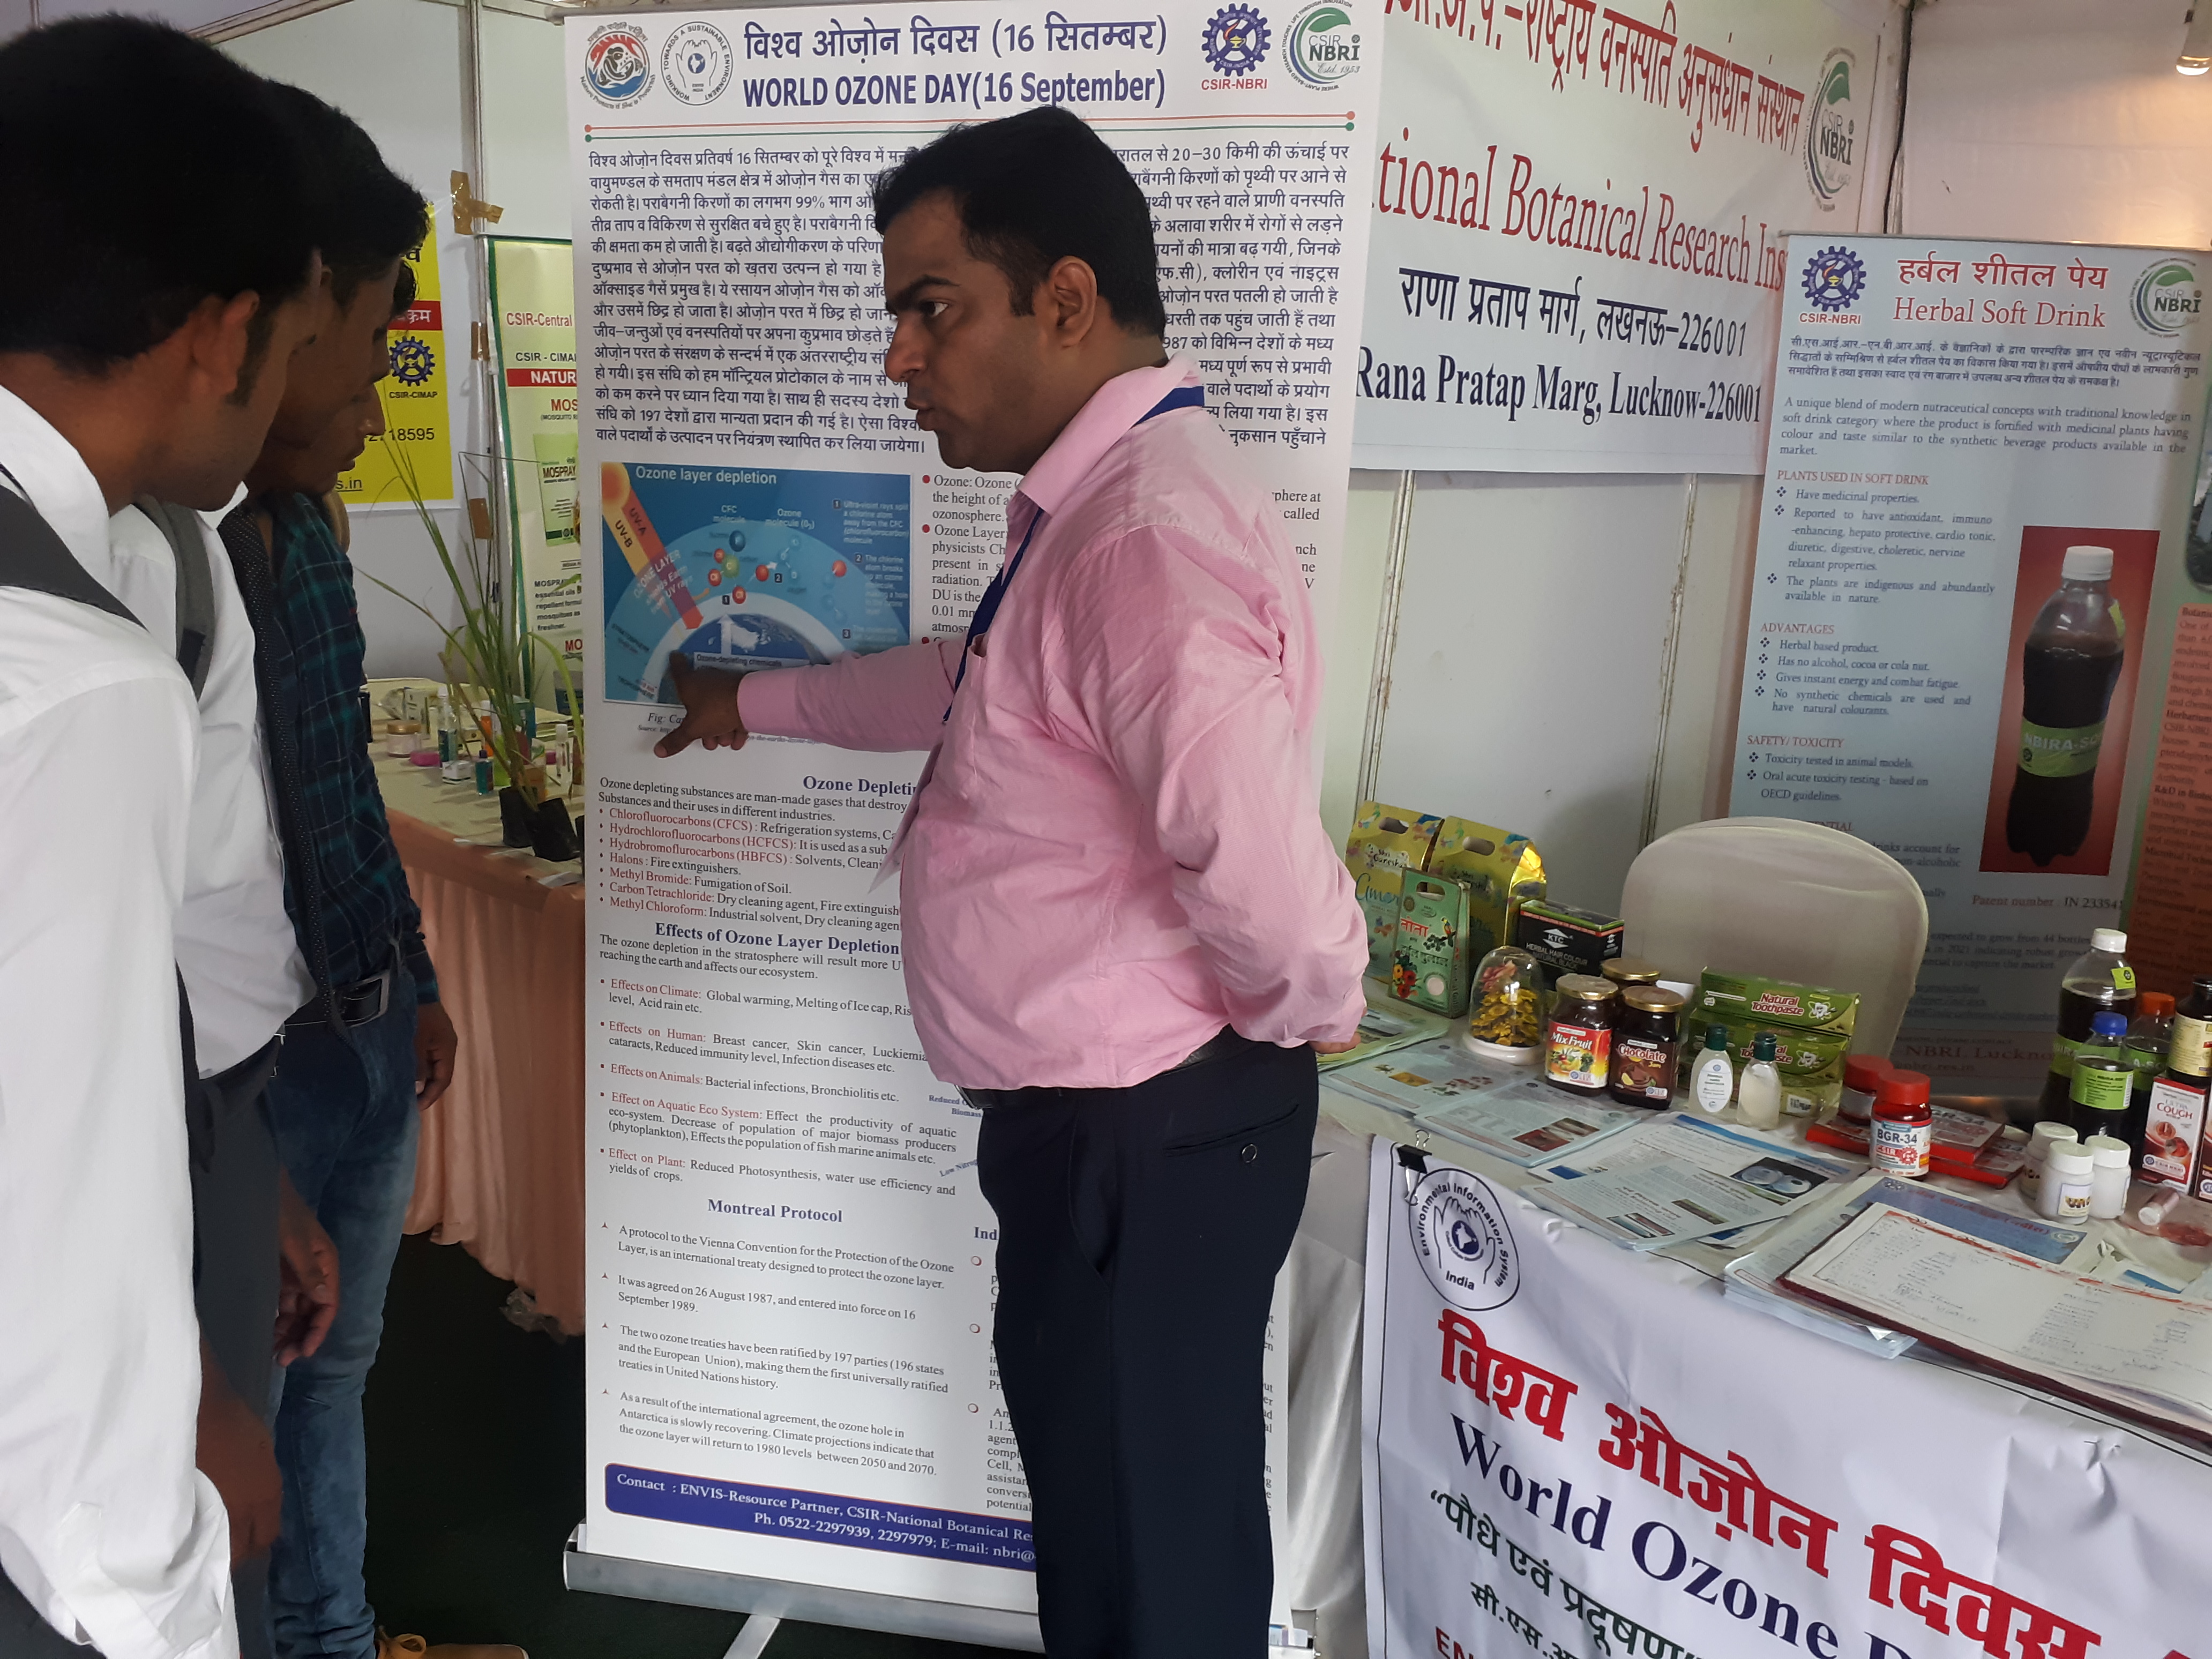 ENVIS-RP-NBRI Celebrated “World Ozone Day-2019” at Bhopal Vigyan Mela-2019